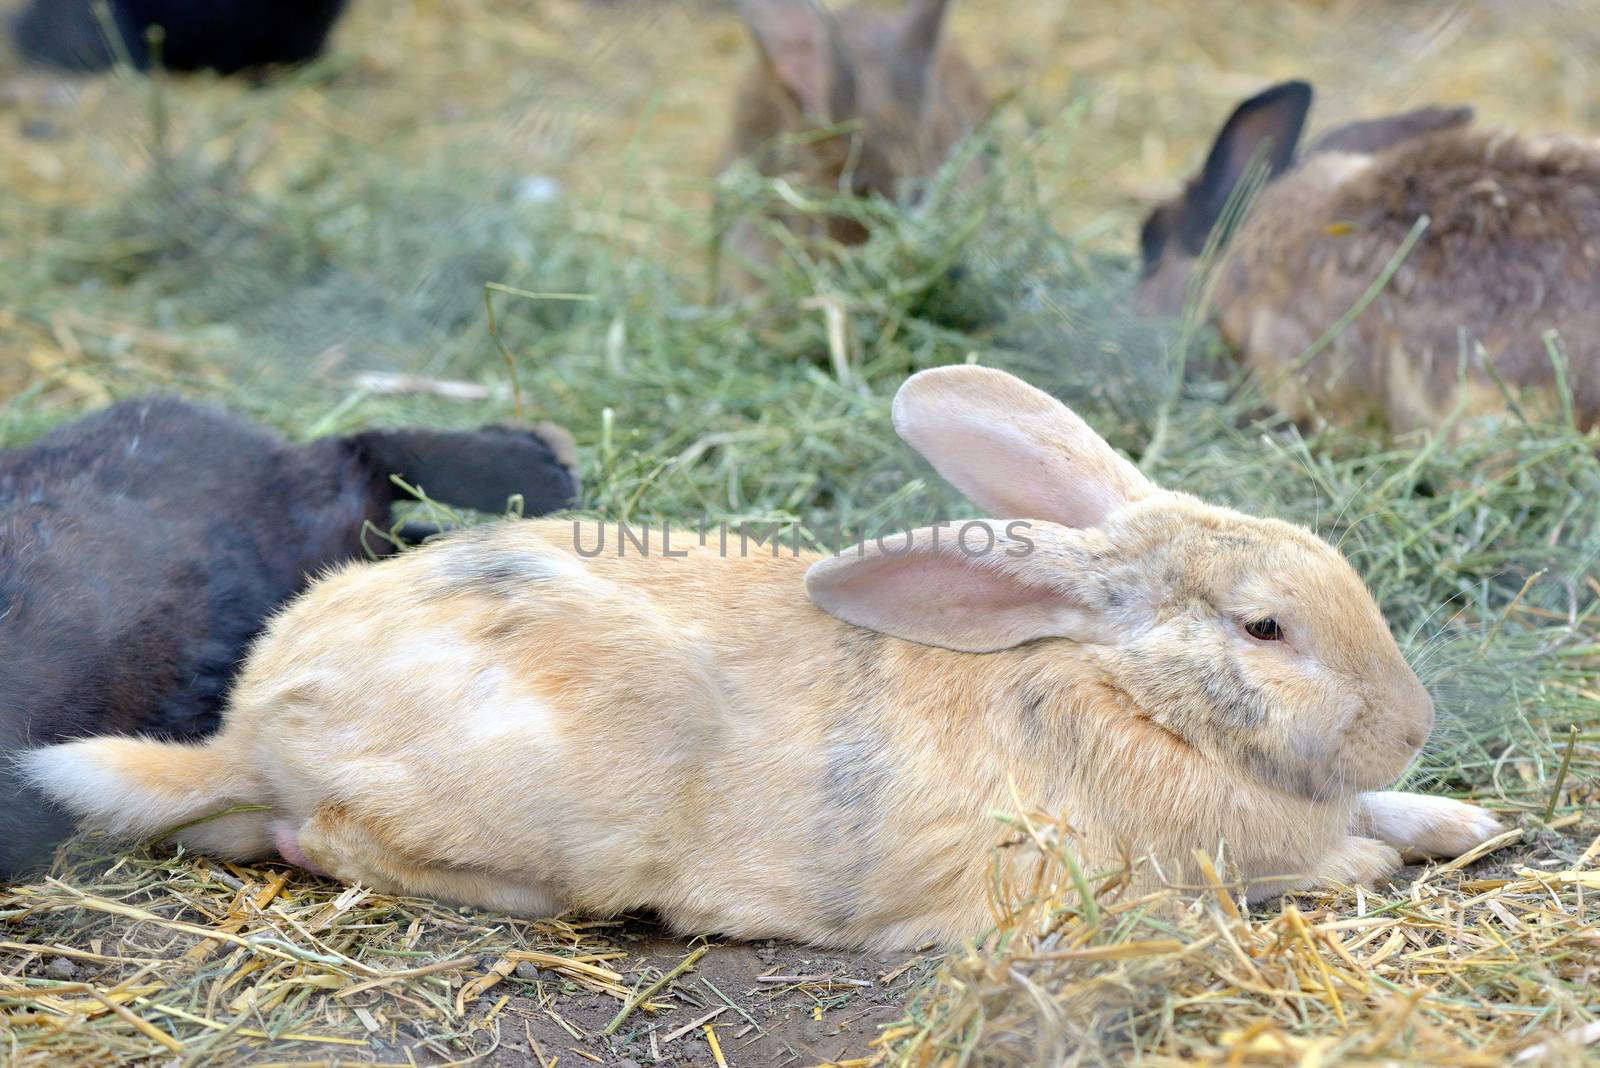 Rabbits in a hutch at farm